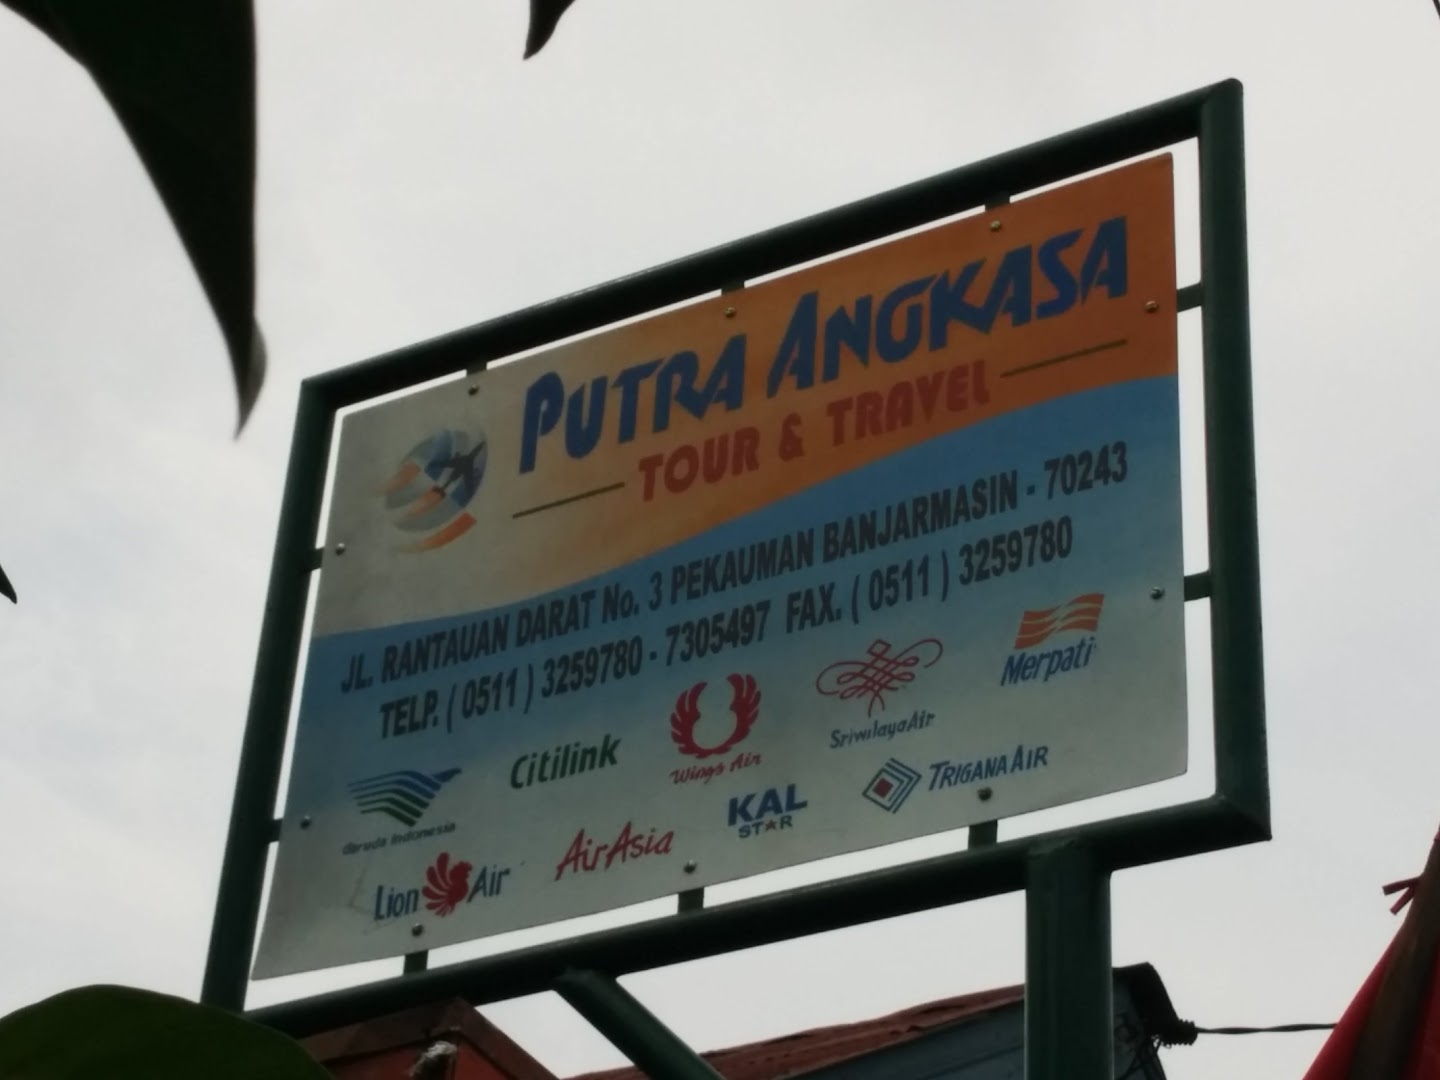 Putra Angkasa Tour & Travel Photo